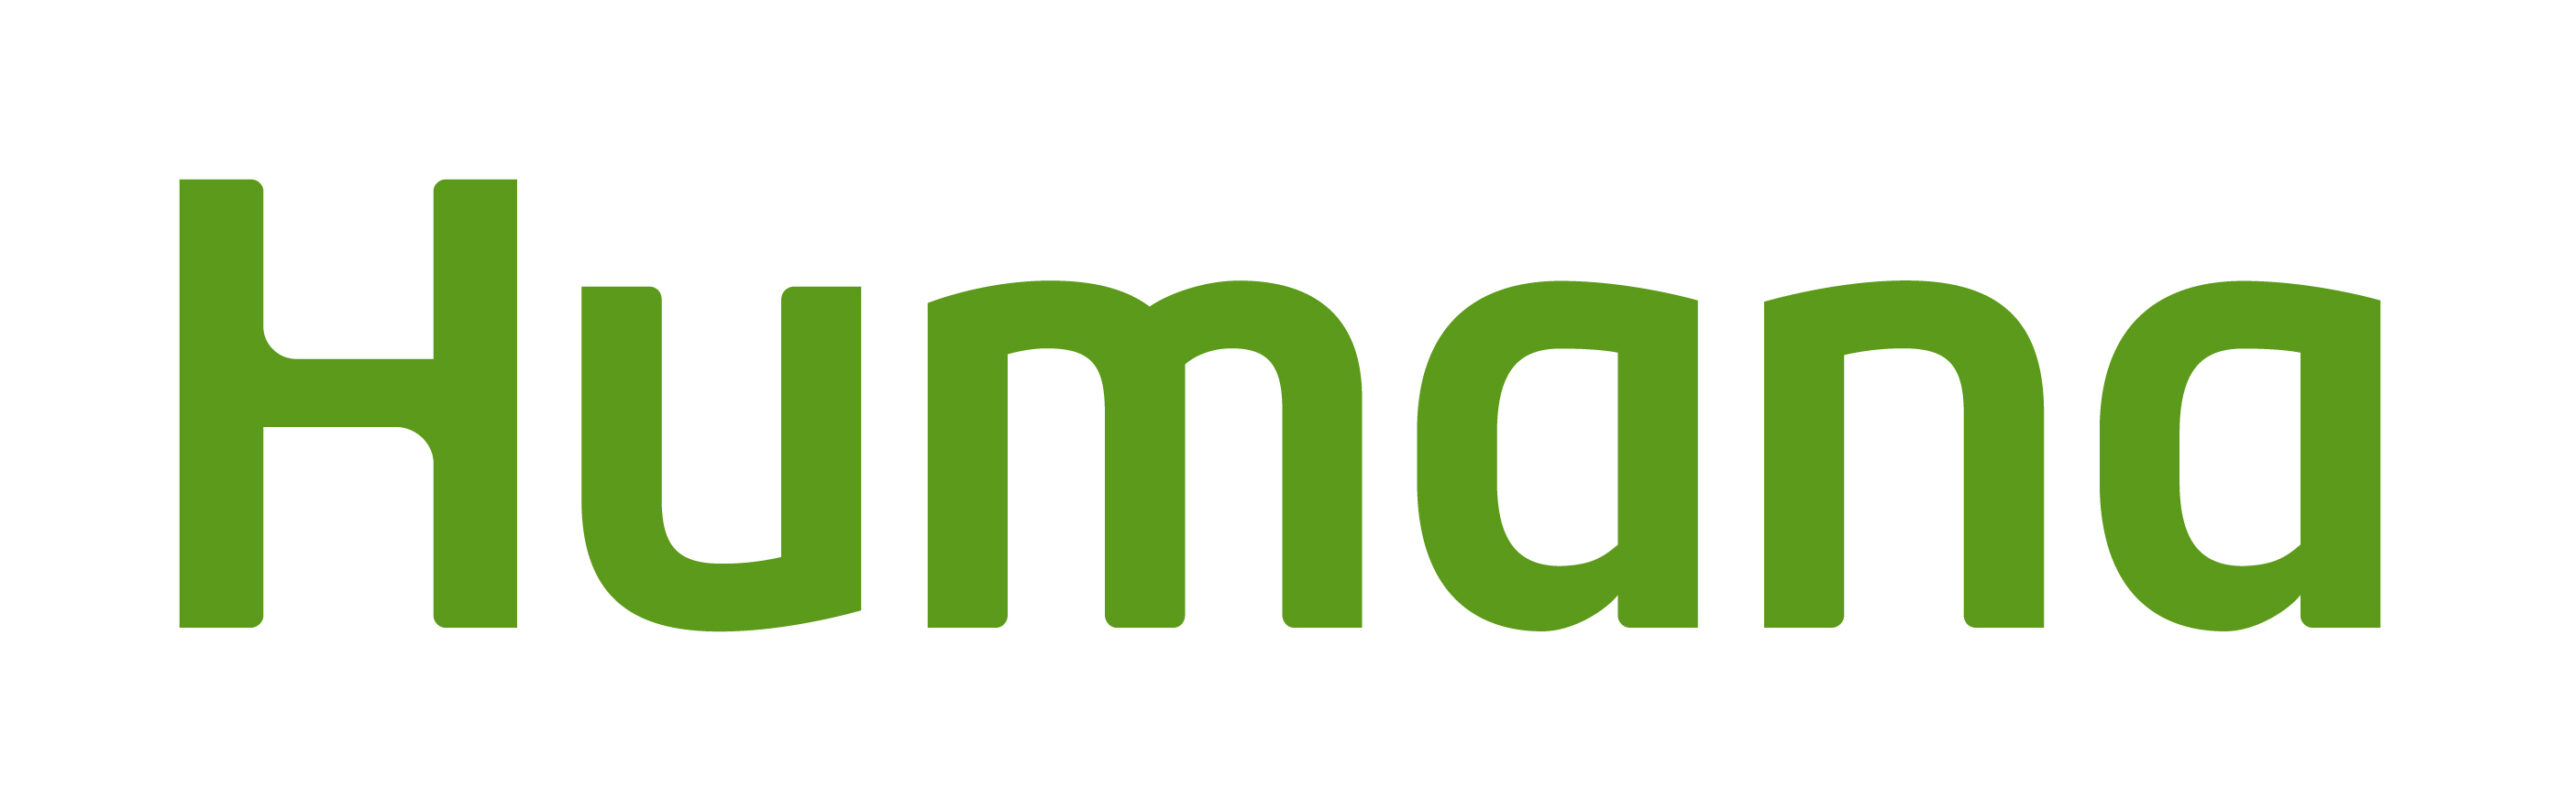 humana green logo